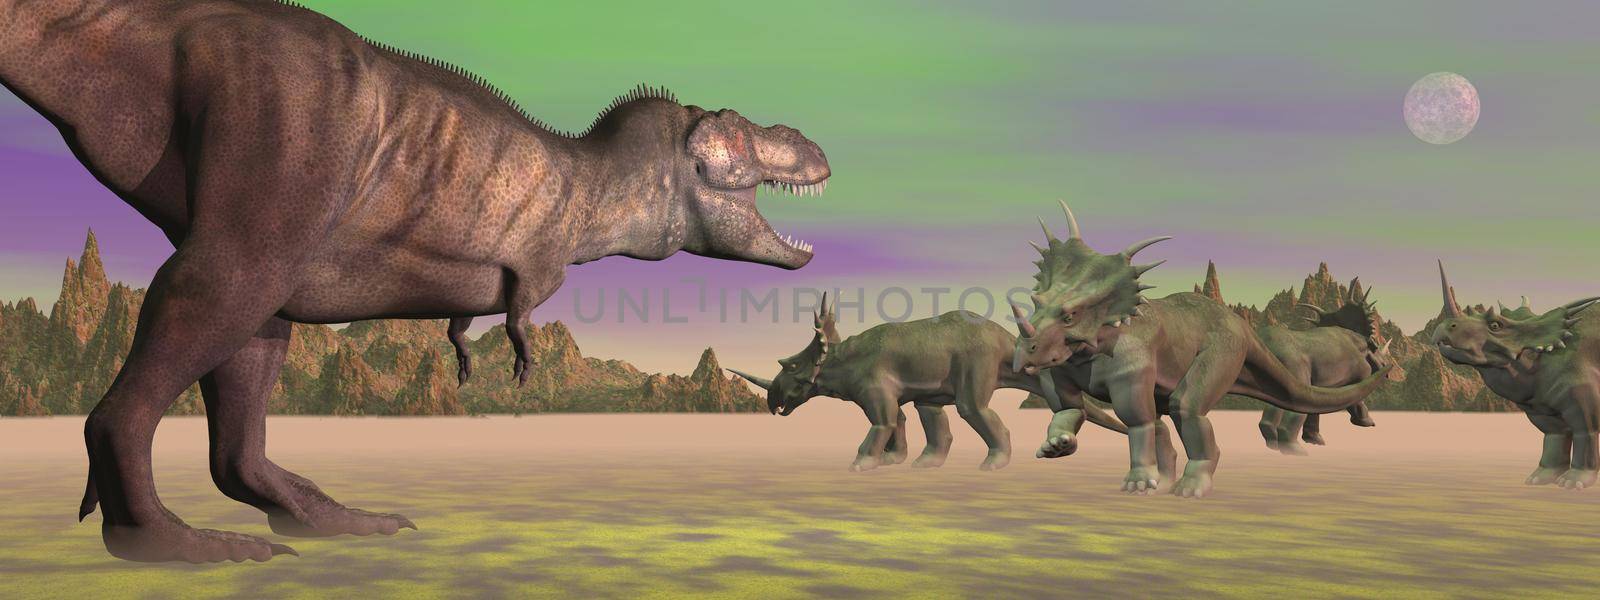 Tyrannosaurus attacking styracosaurus dinosaurs in desert landscape by green full moon light